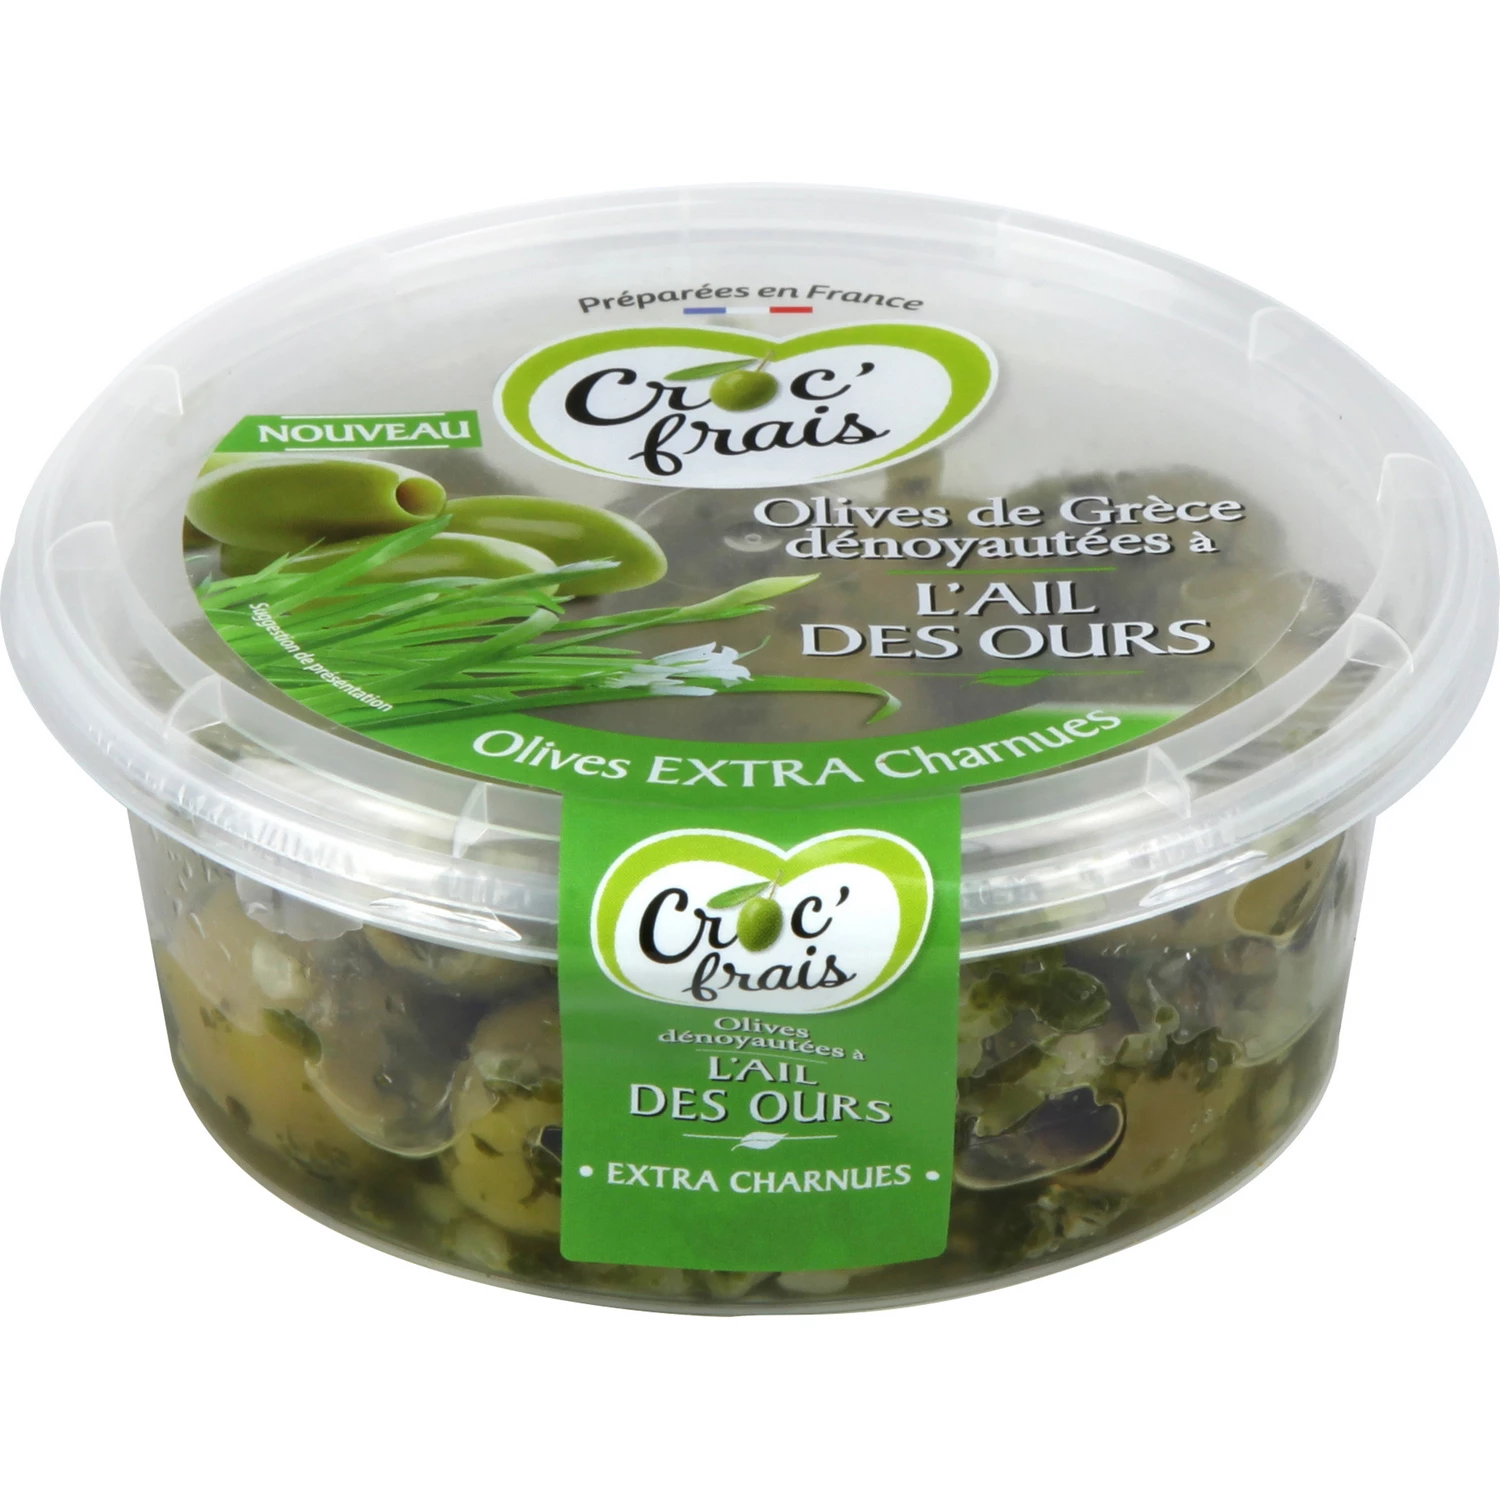 Green Olives Den A L Garlic Our